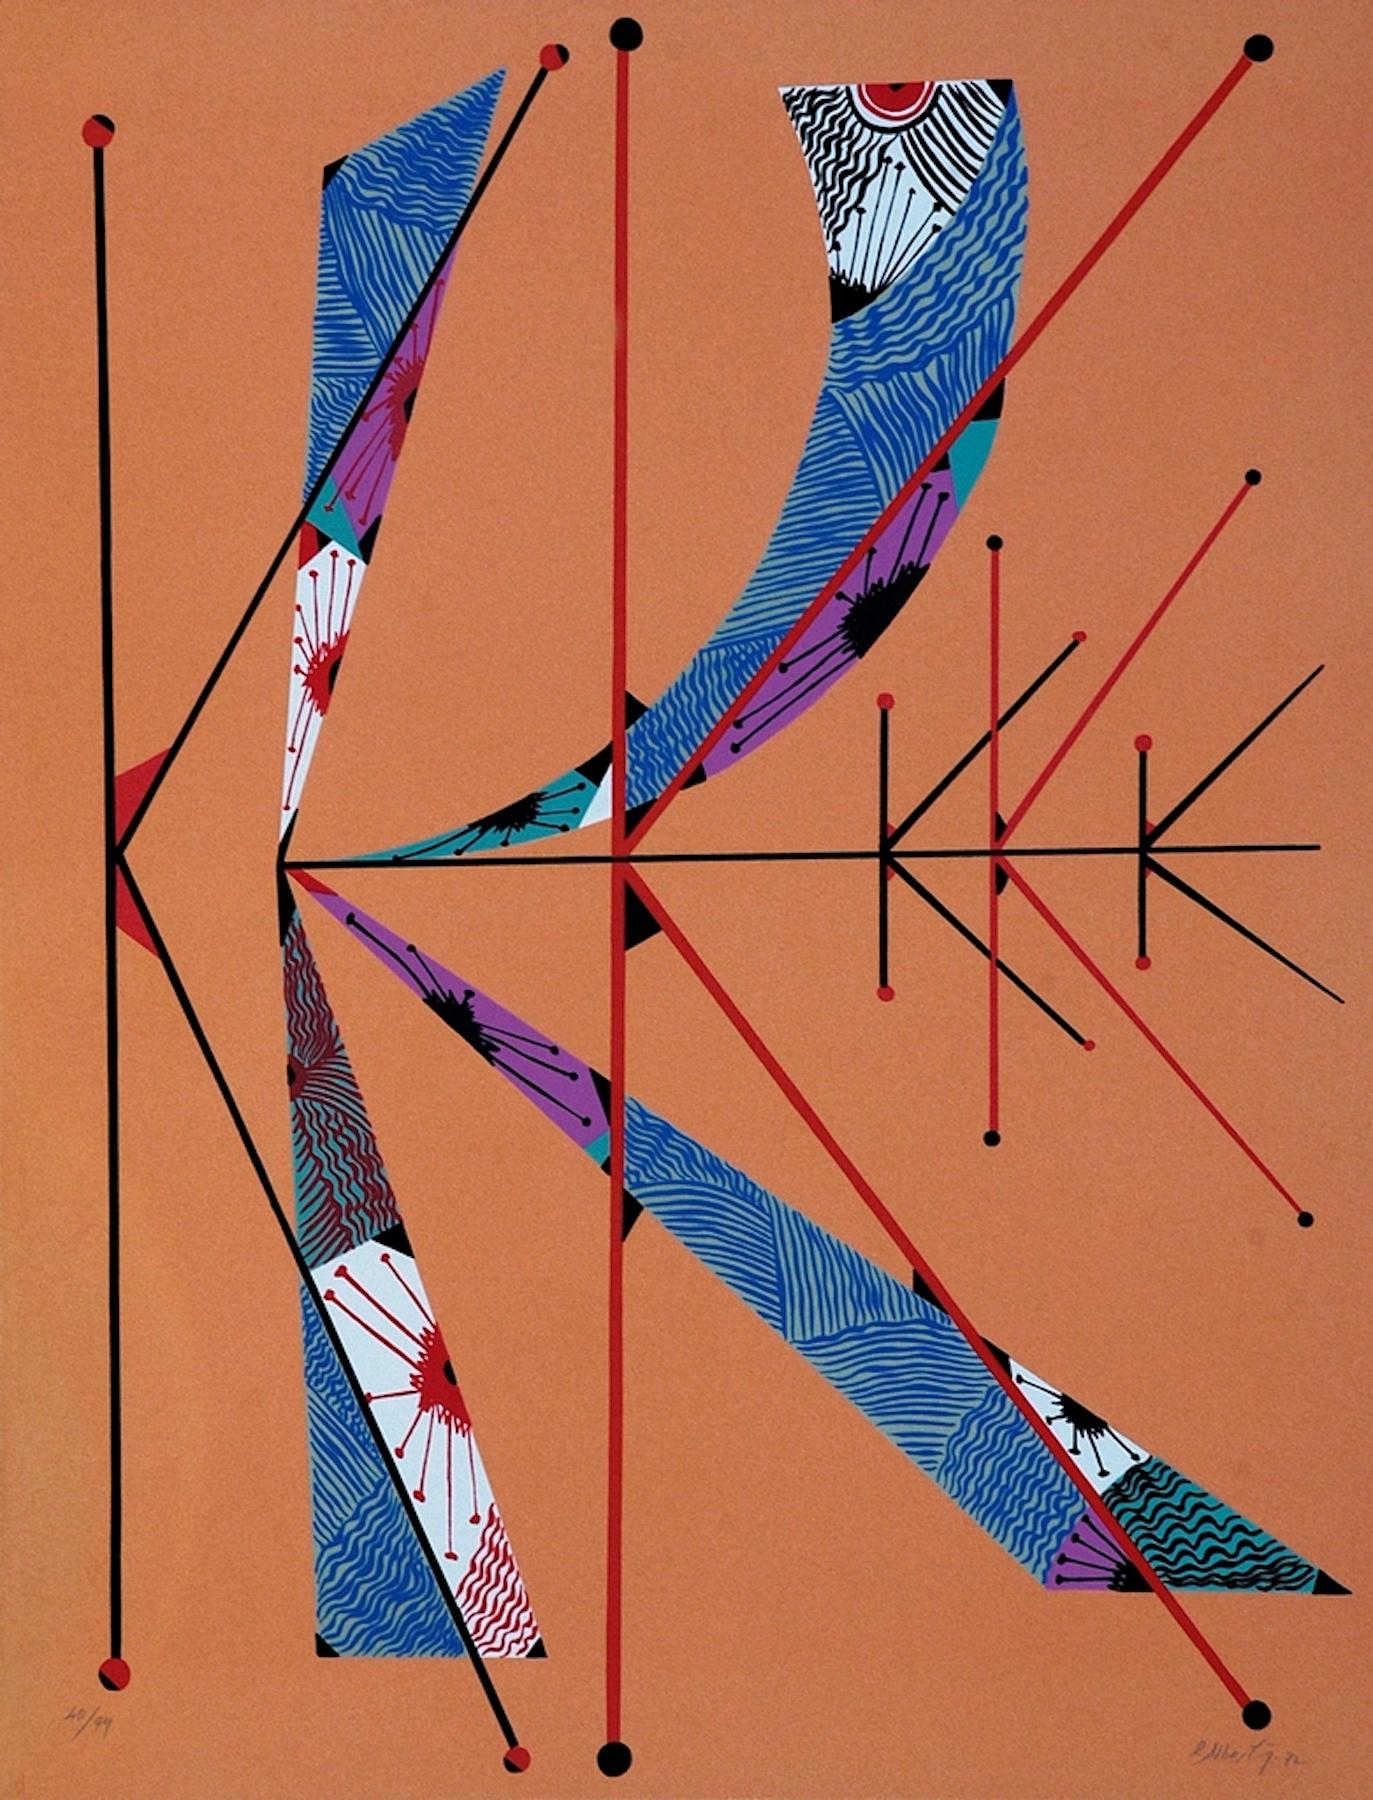 Letter K - Original Lithograph by Raphael Alberti - 1972